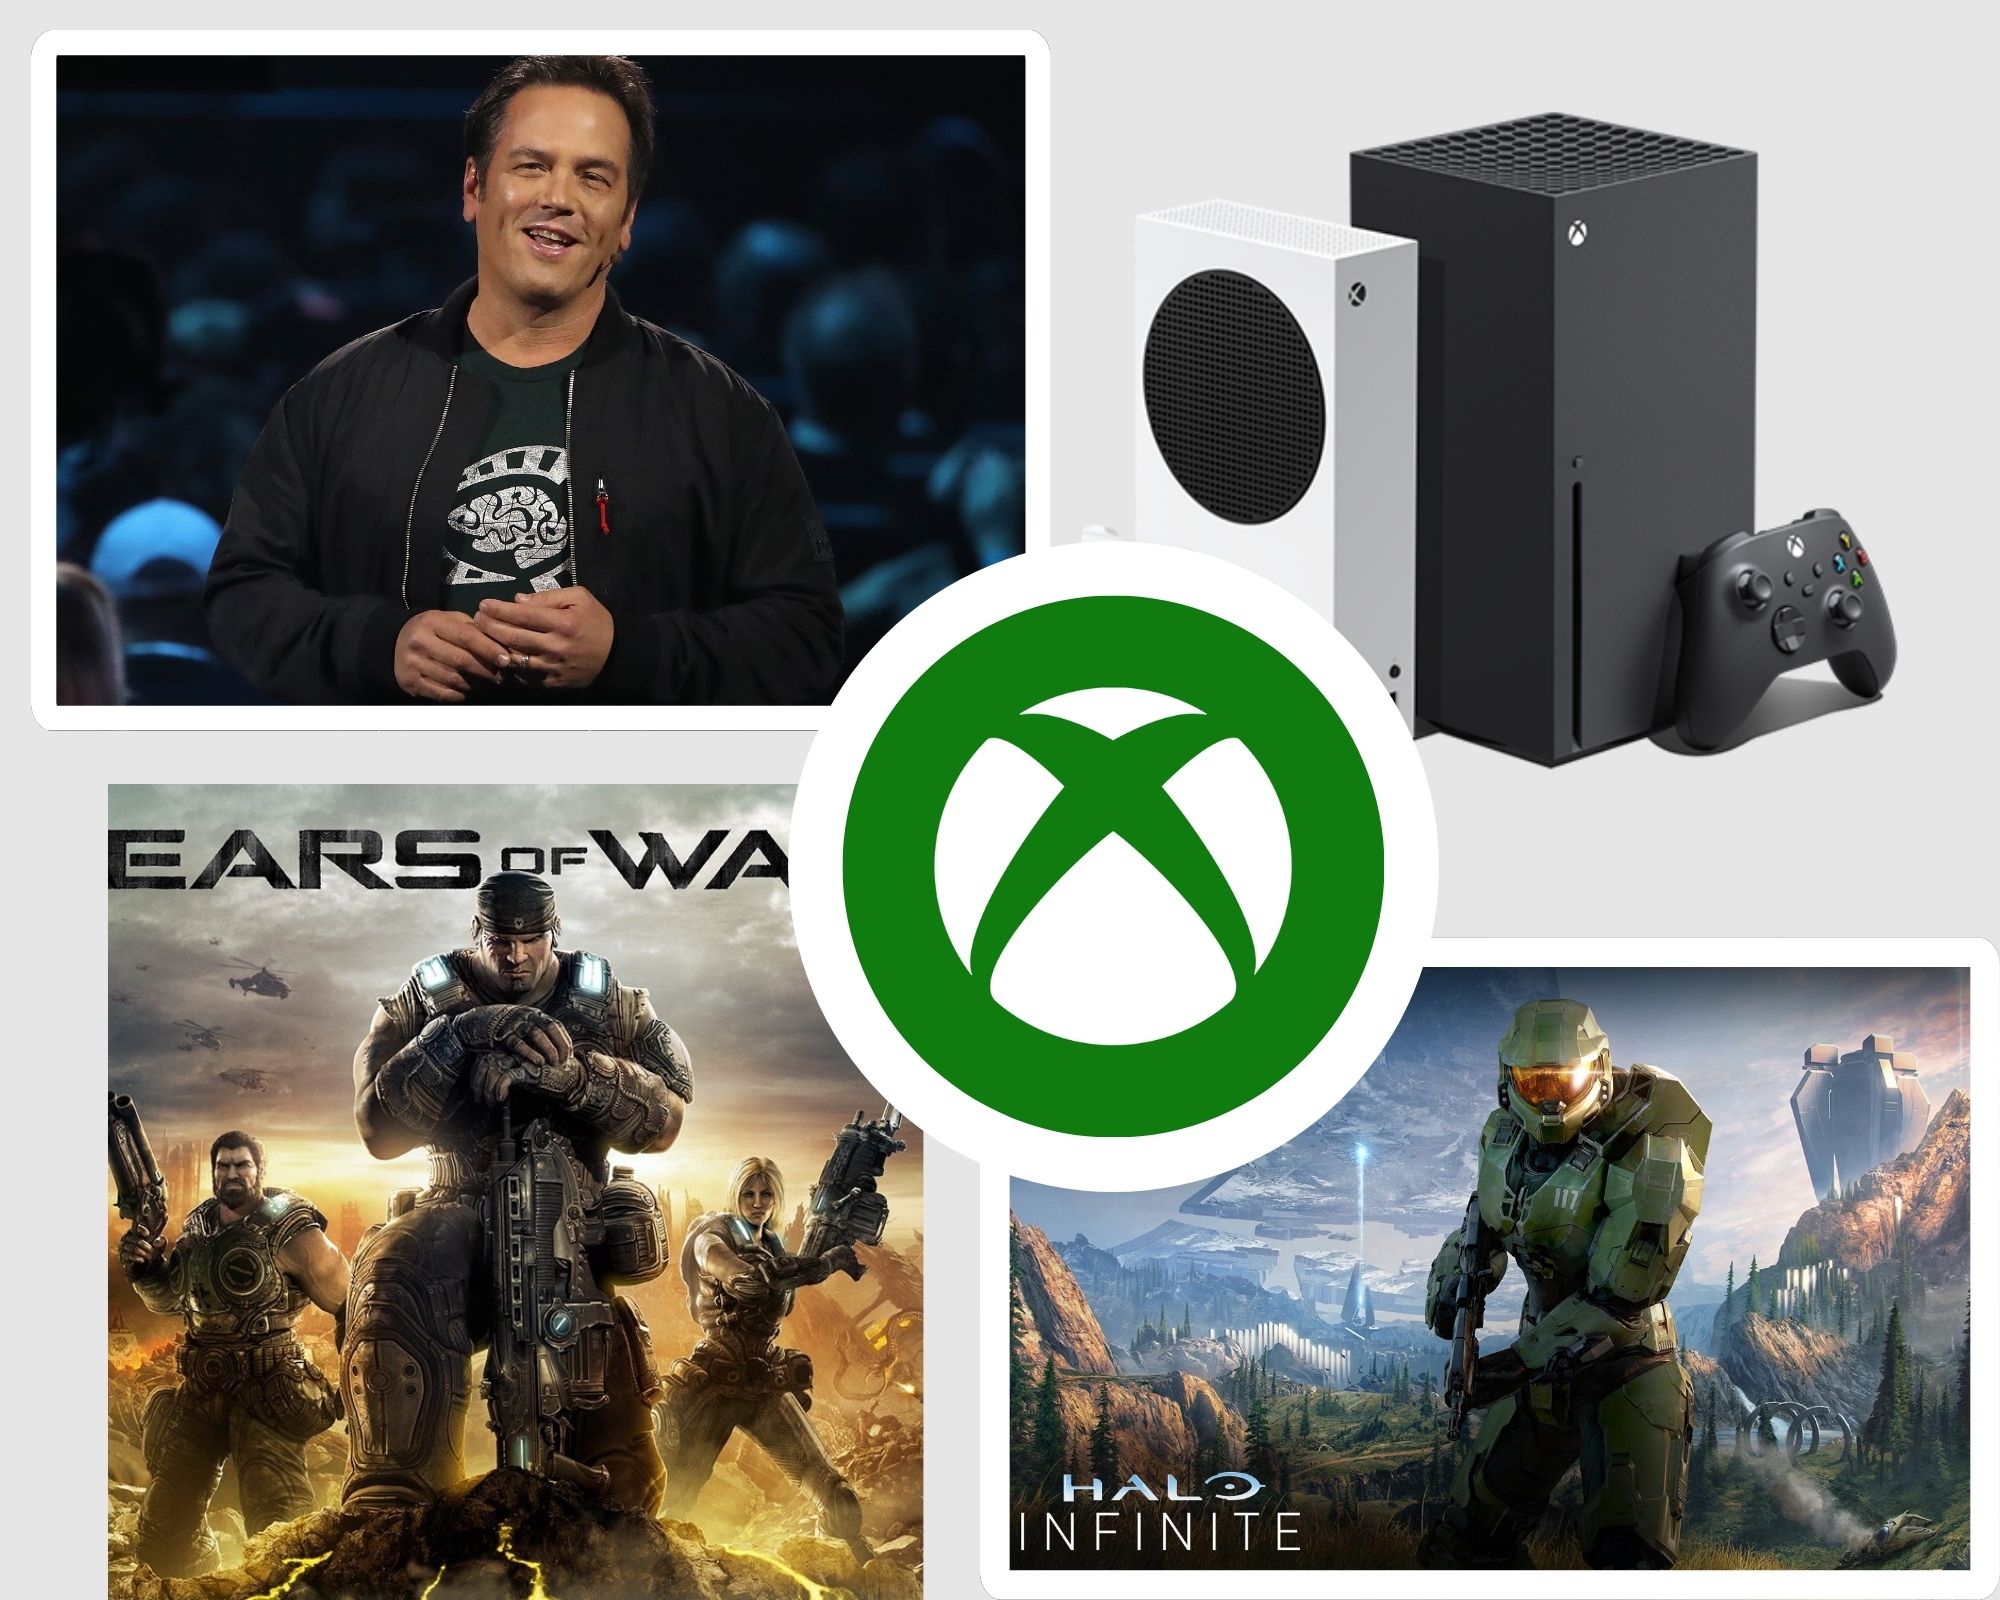 Xbox Game Pass ya tiene 34 millones de suscriptores, confirma Phil Spencer